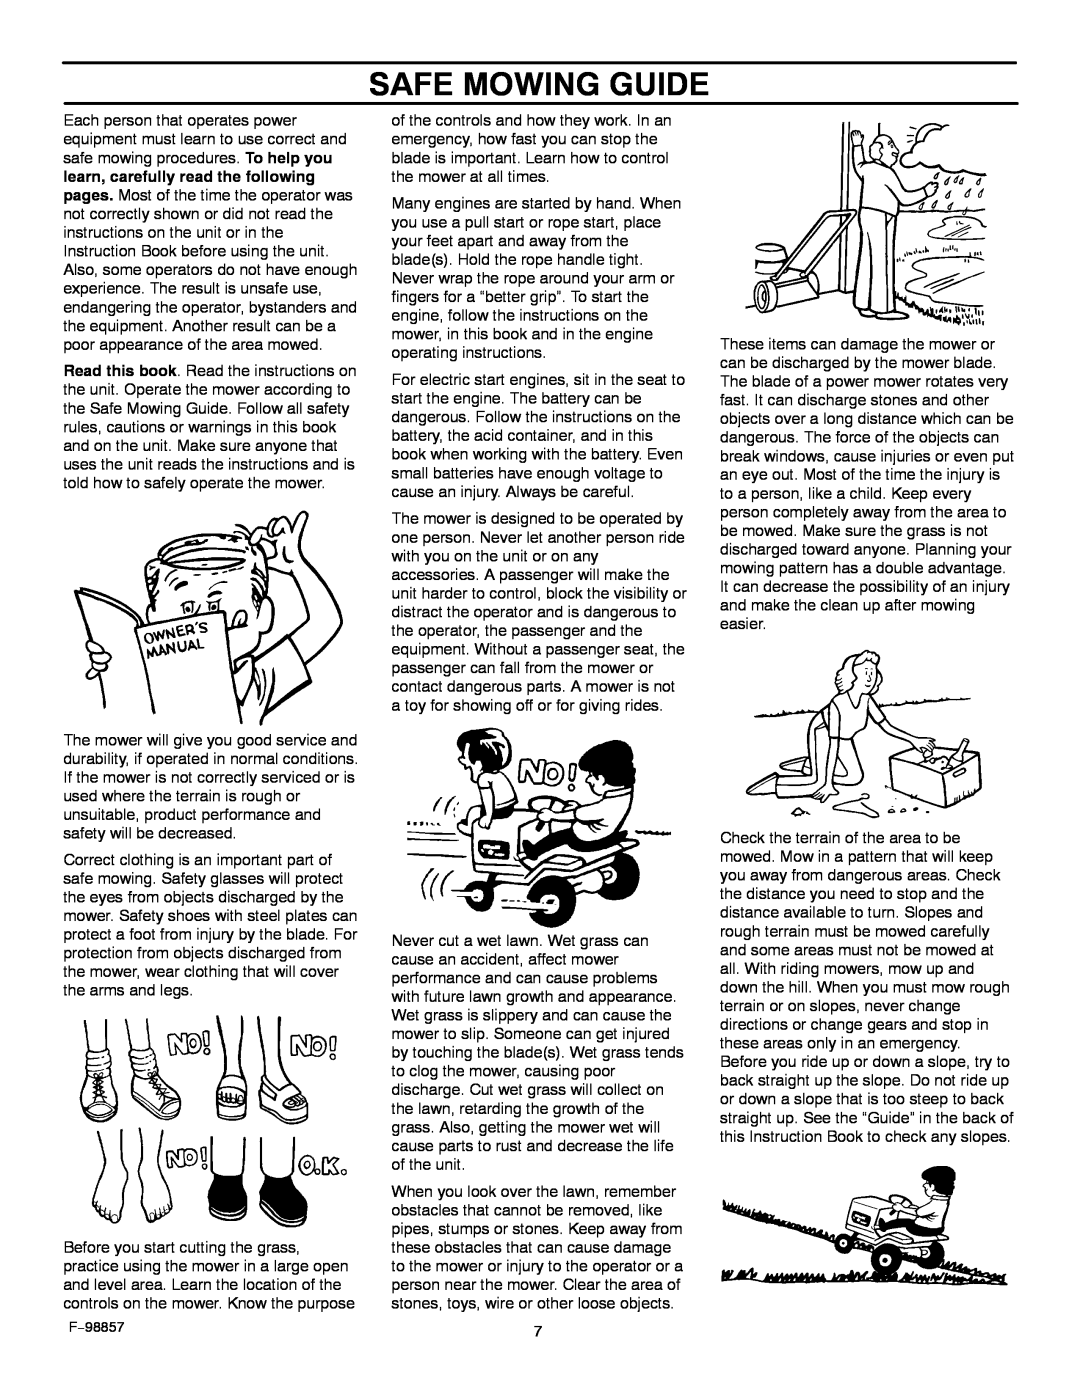 Hayter Mowers 30-Dec manual Safe Mowing Guide 